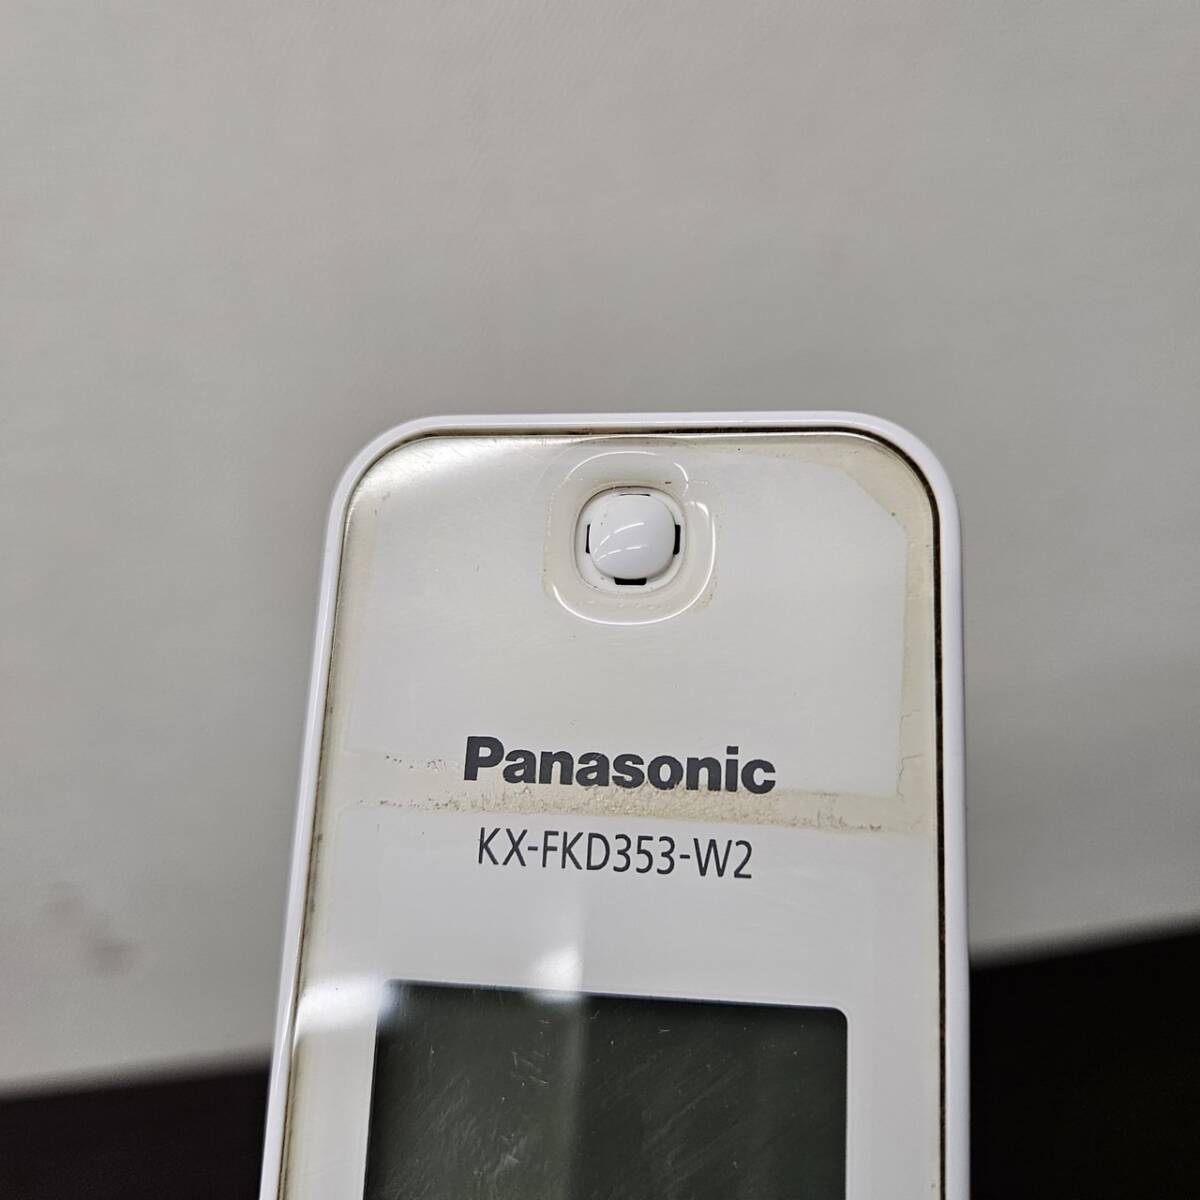  postage 600 jpy ~ Junk operation not yet verification Panasonic KX-FKD353-W2 Panasonic cordless handset 